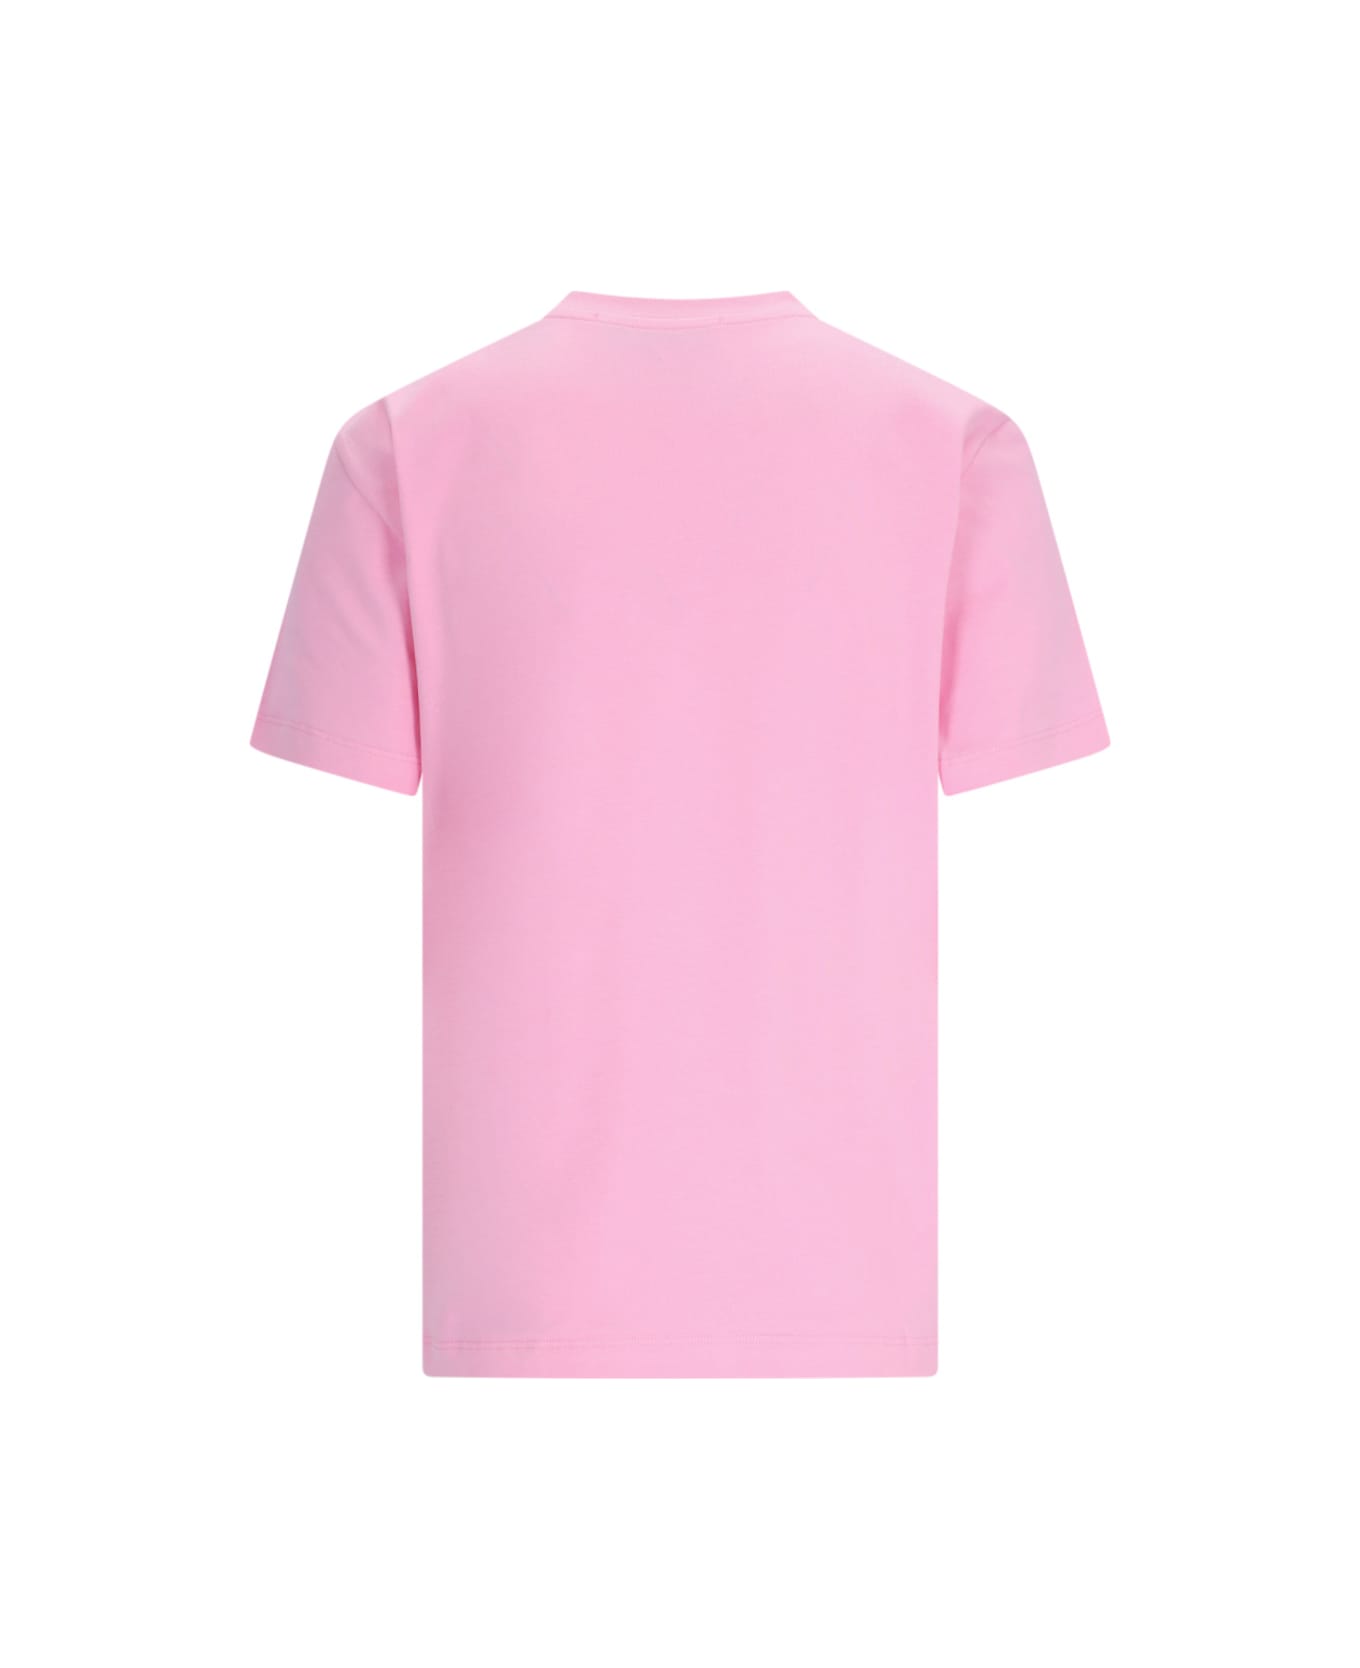 MSGM Printed T-shirt - Pink Tシャツ